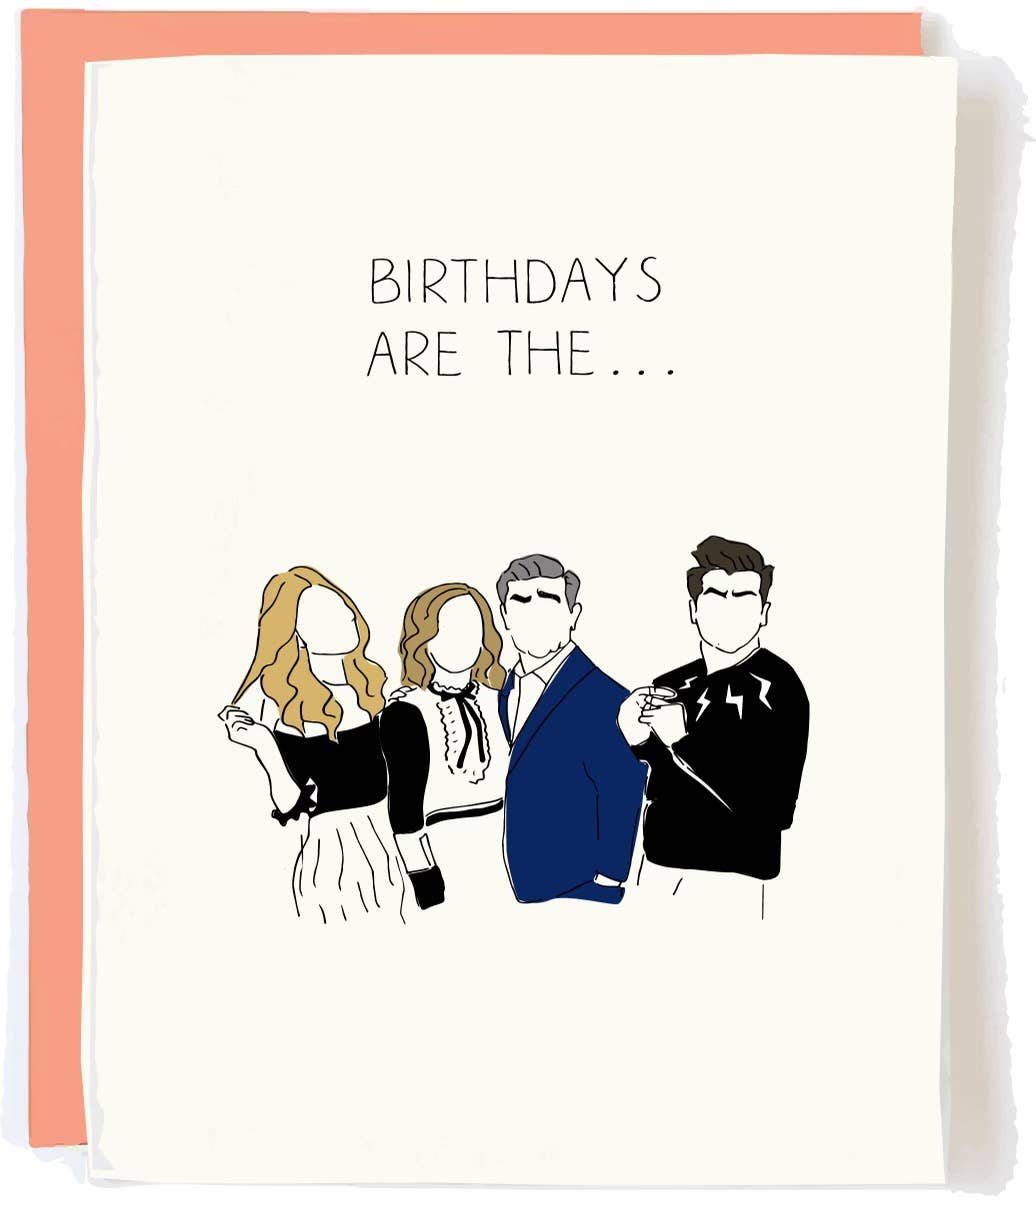 Birthdays Are the... (Schitt's Creek) Card